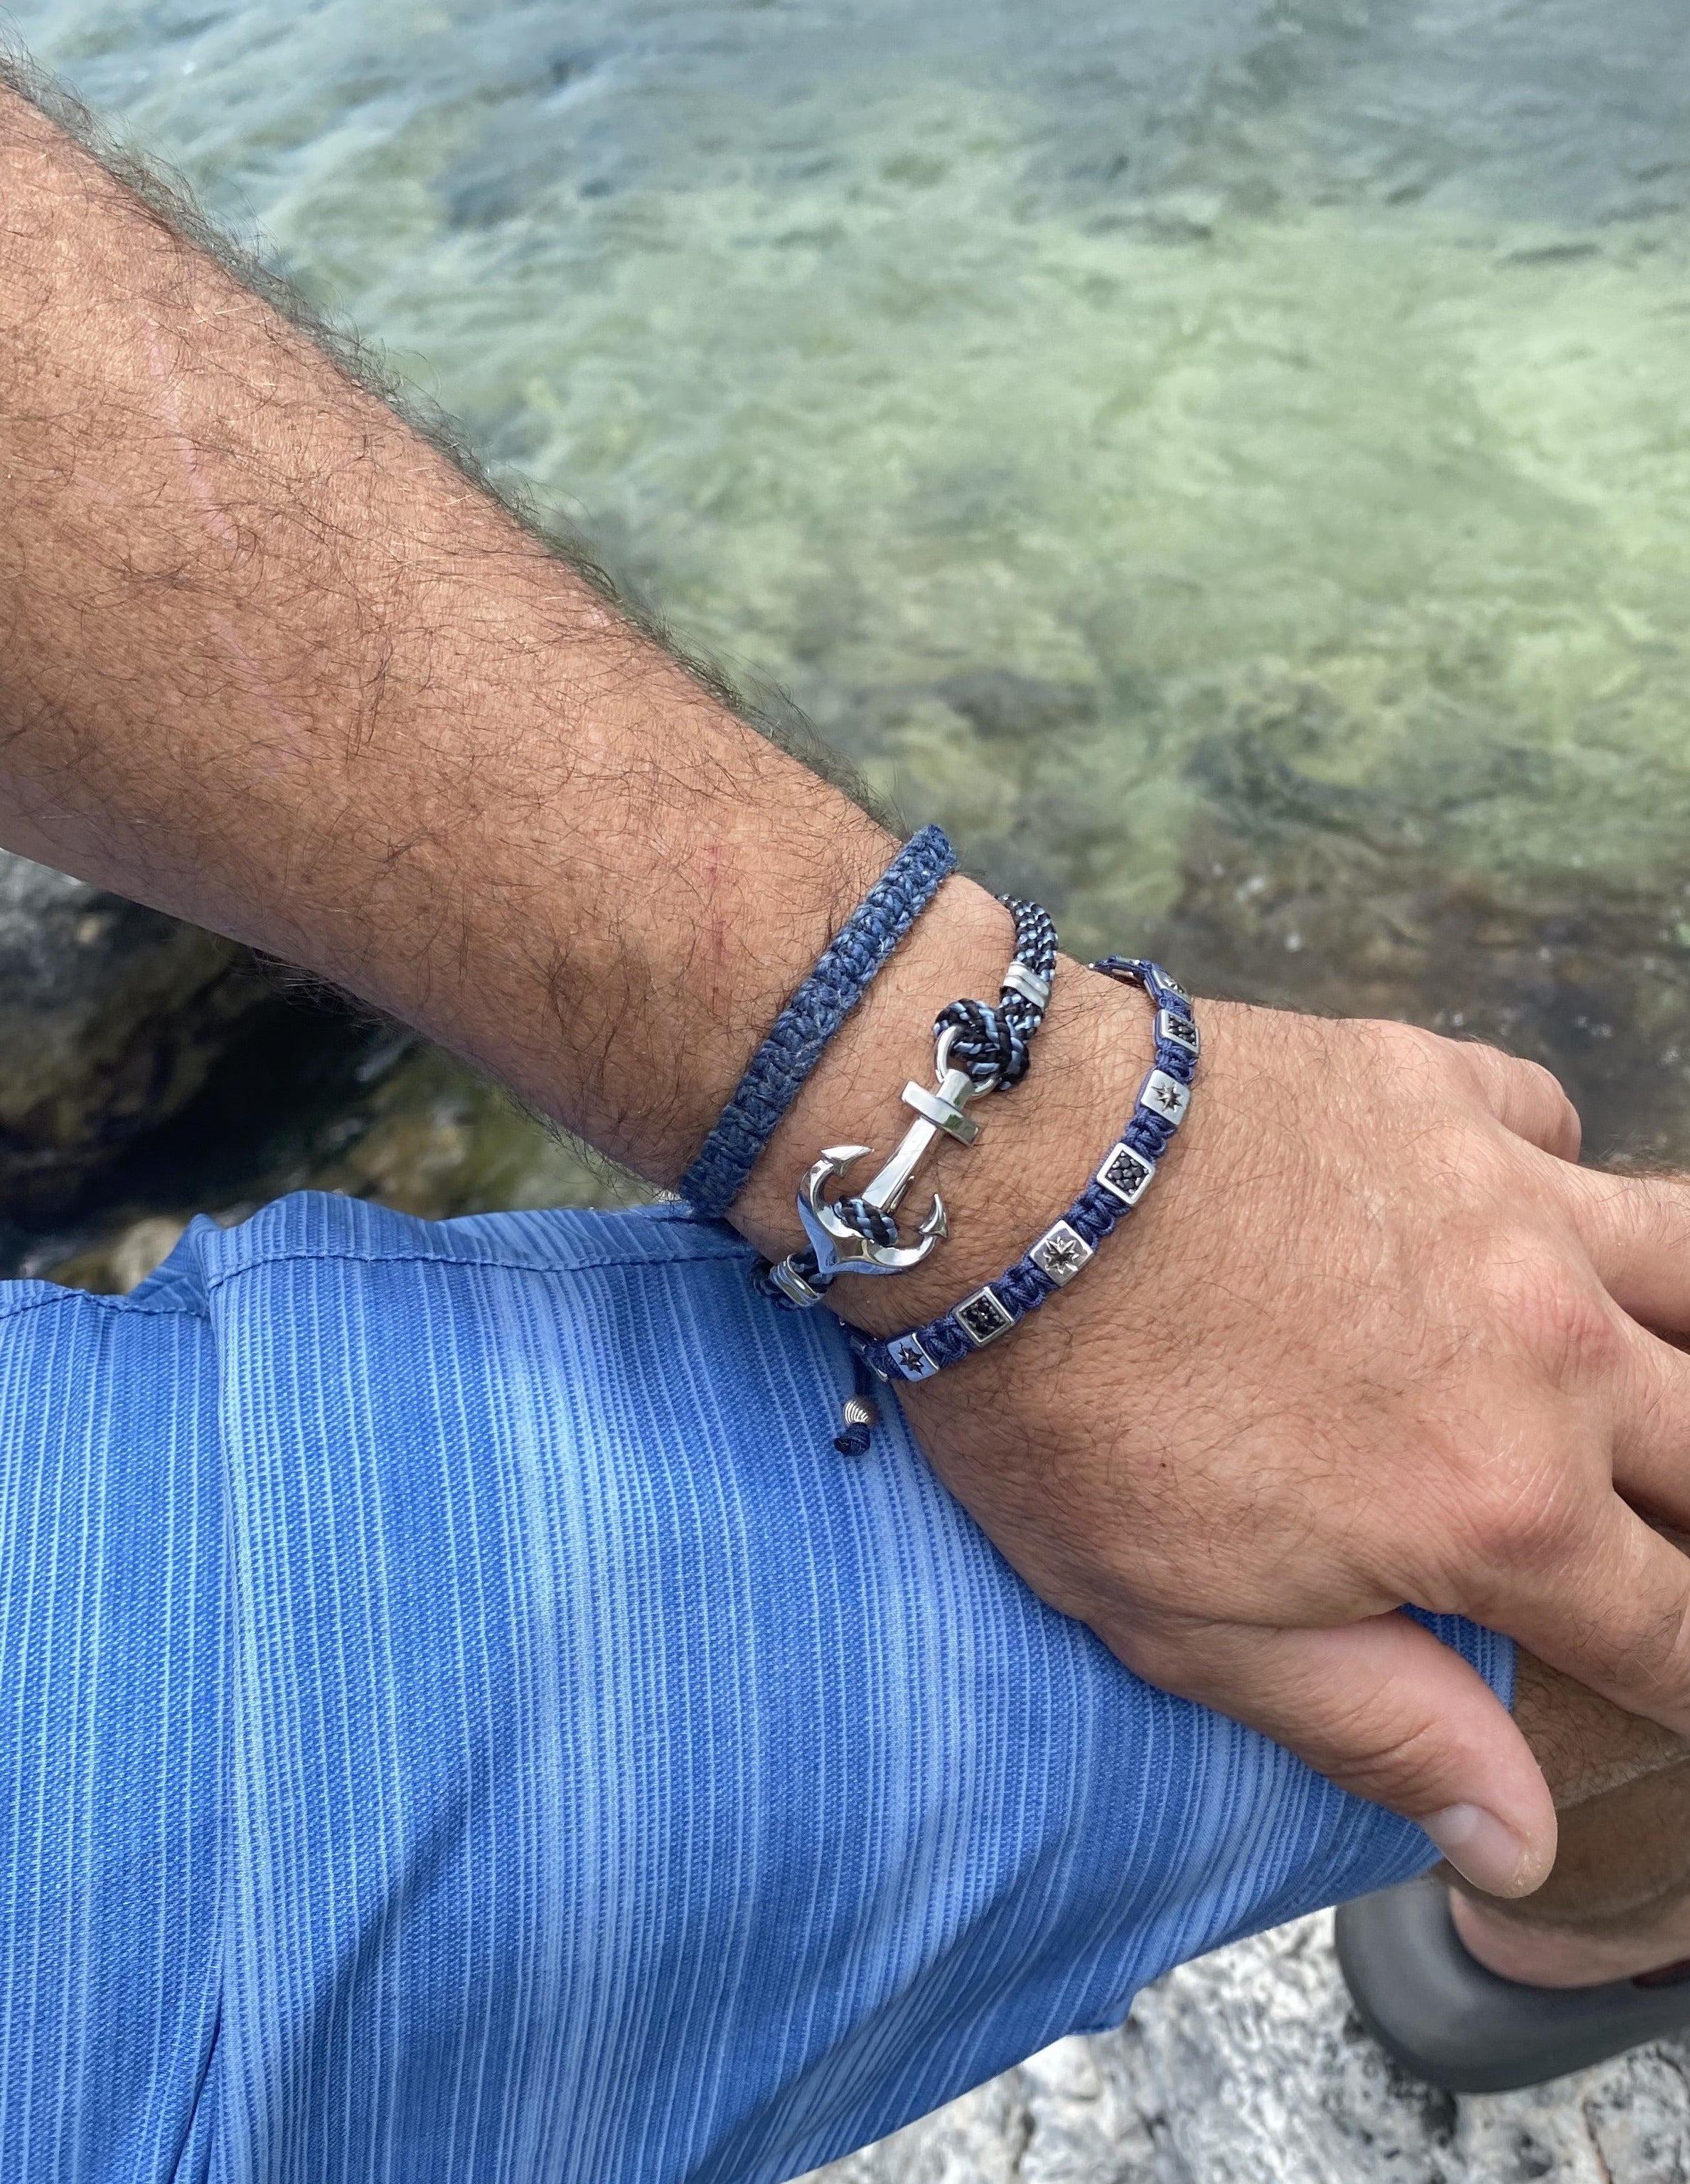 Italian made sterling silver bracelet  Rhodium coated  8" long  Two row white & blue pattern bracelet   Adjustable slide lock